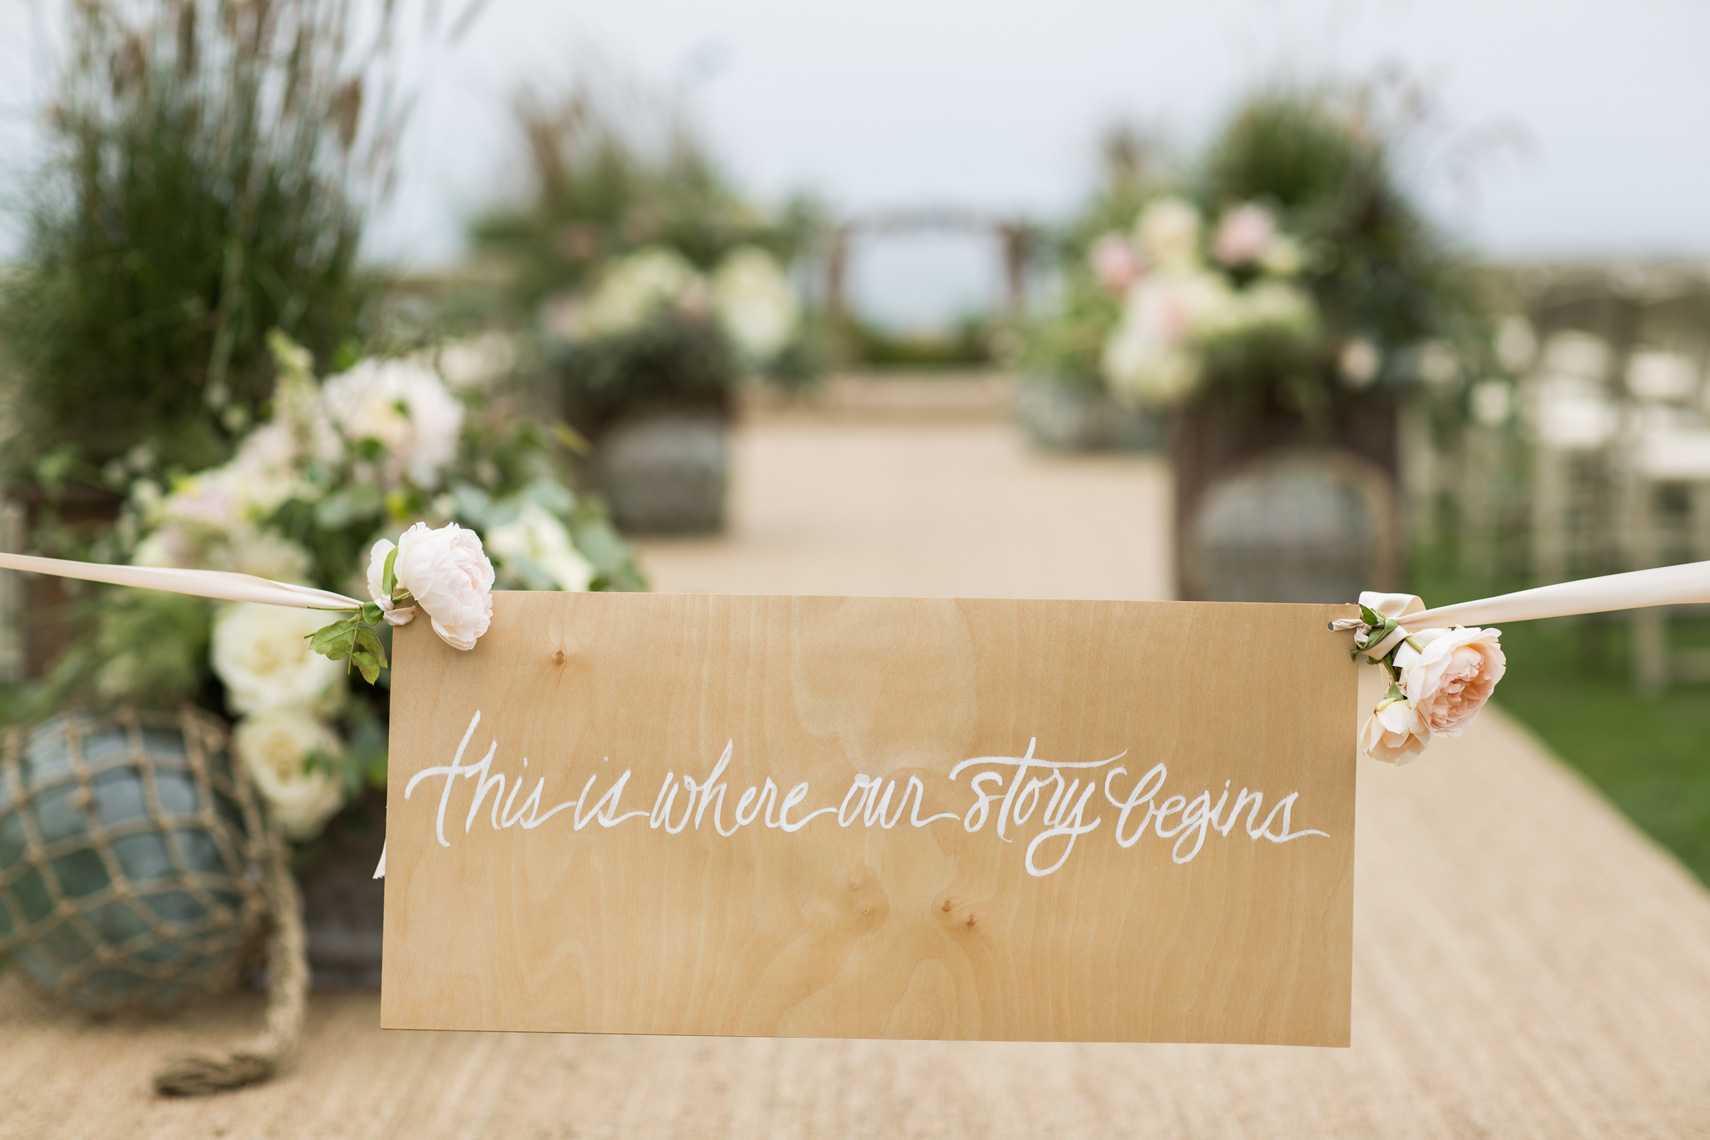 Ceremony details for wedding at Montage, Laguna Beach